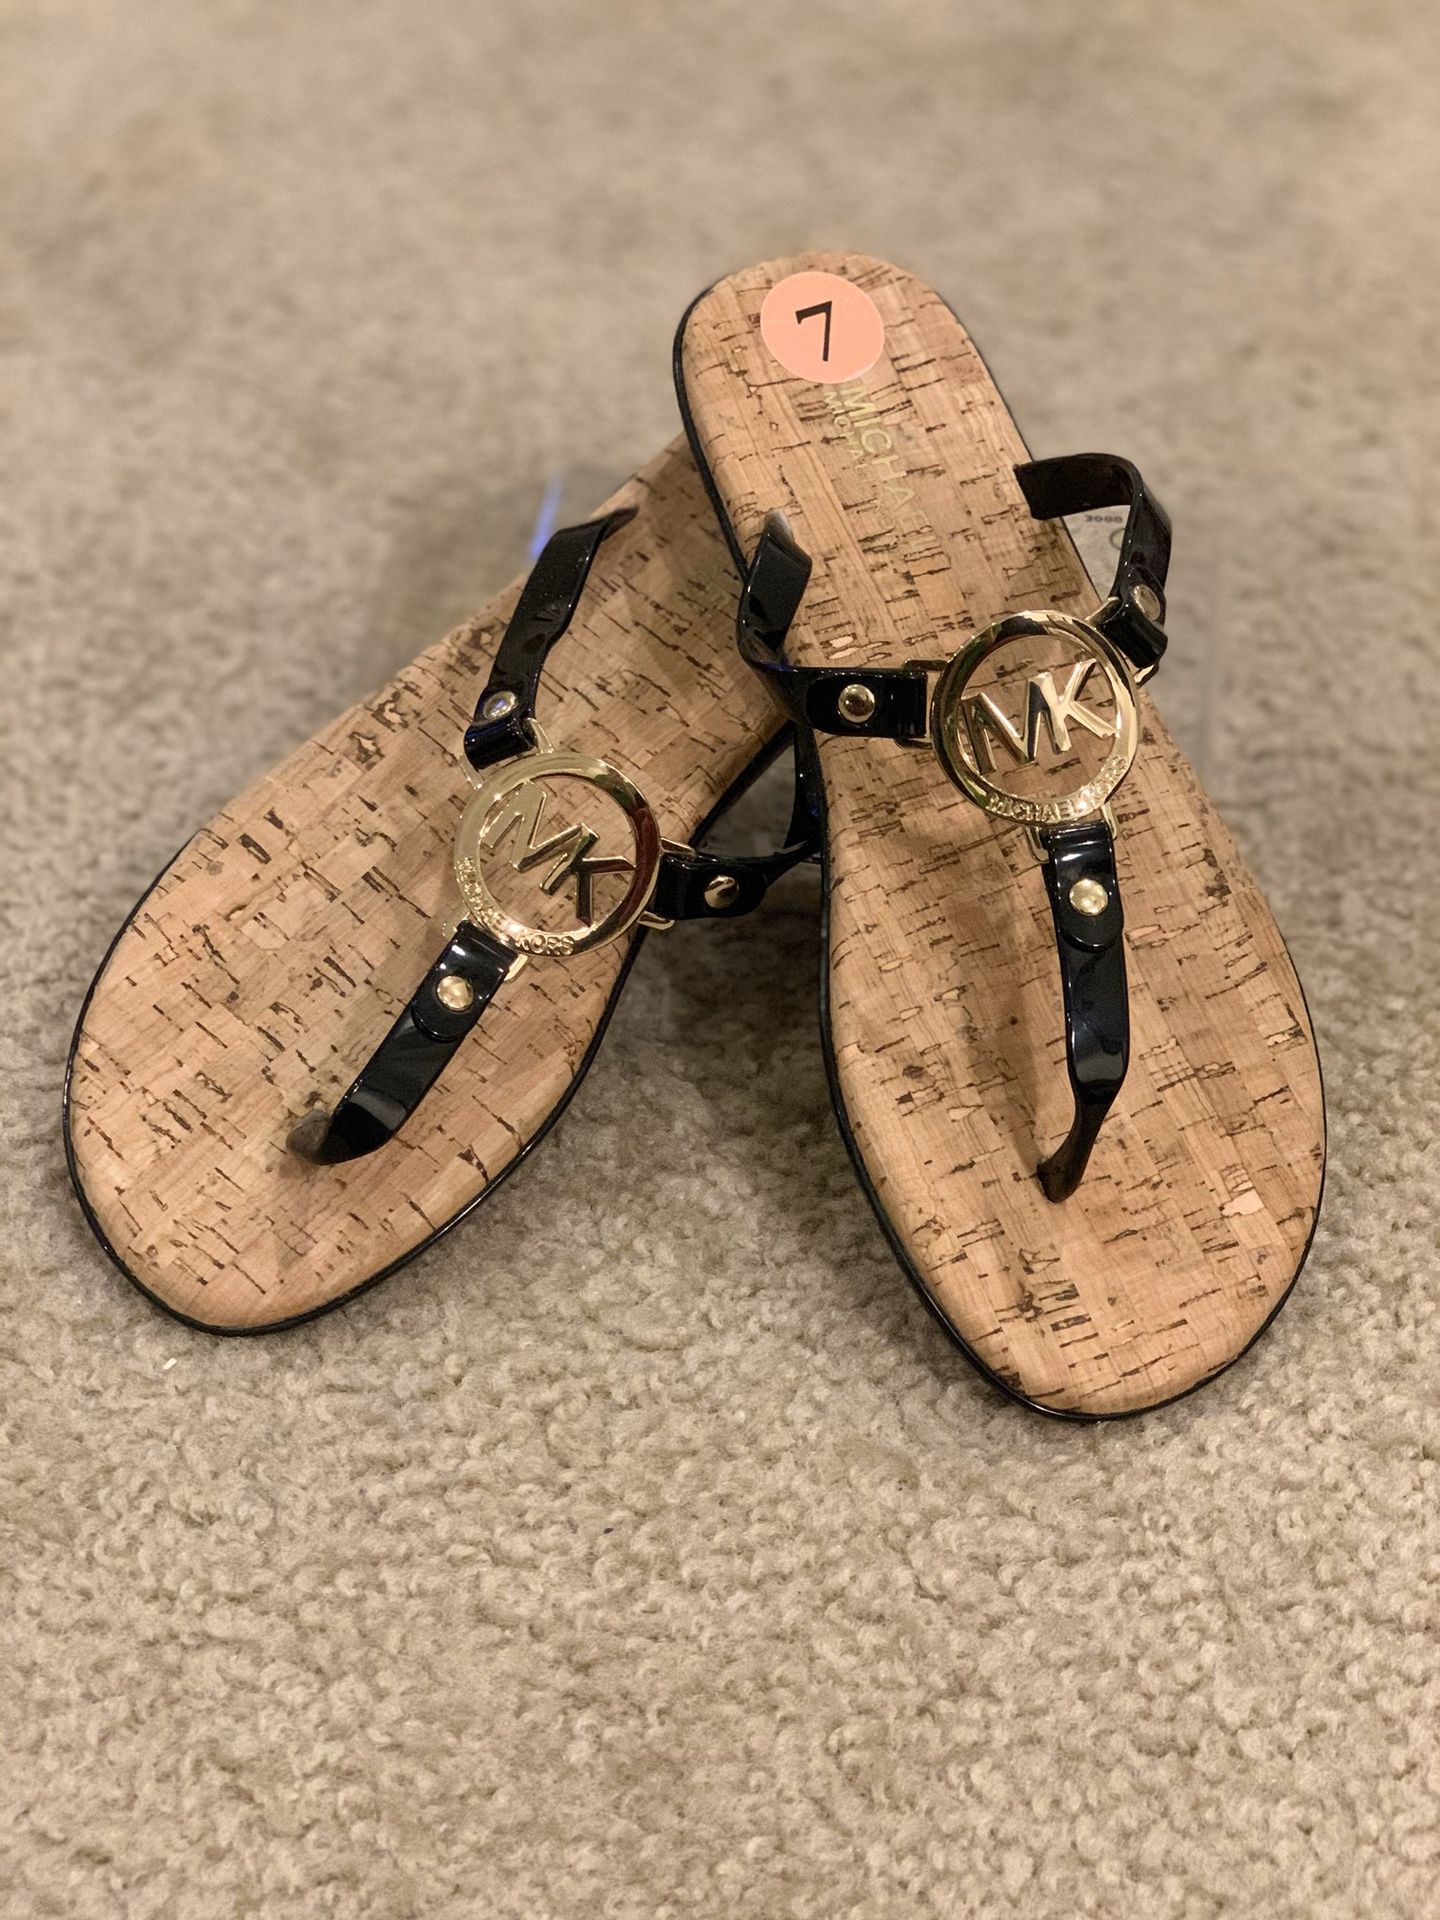 Michael Kors sandals